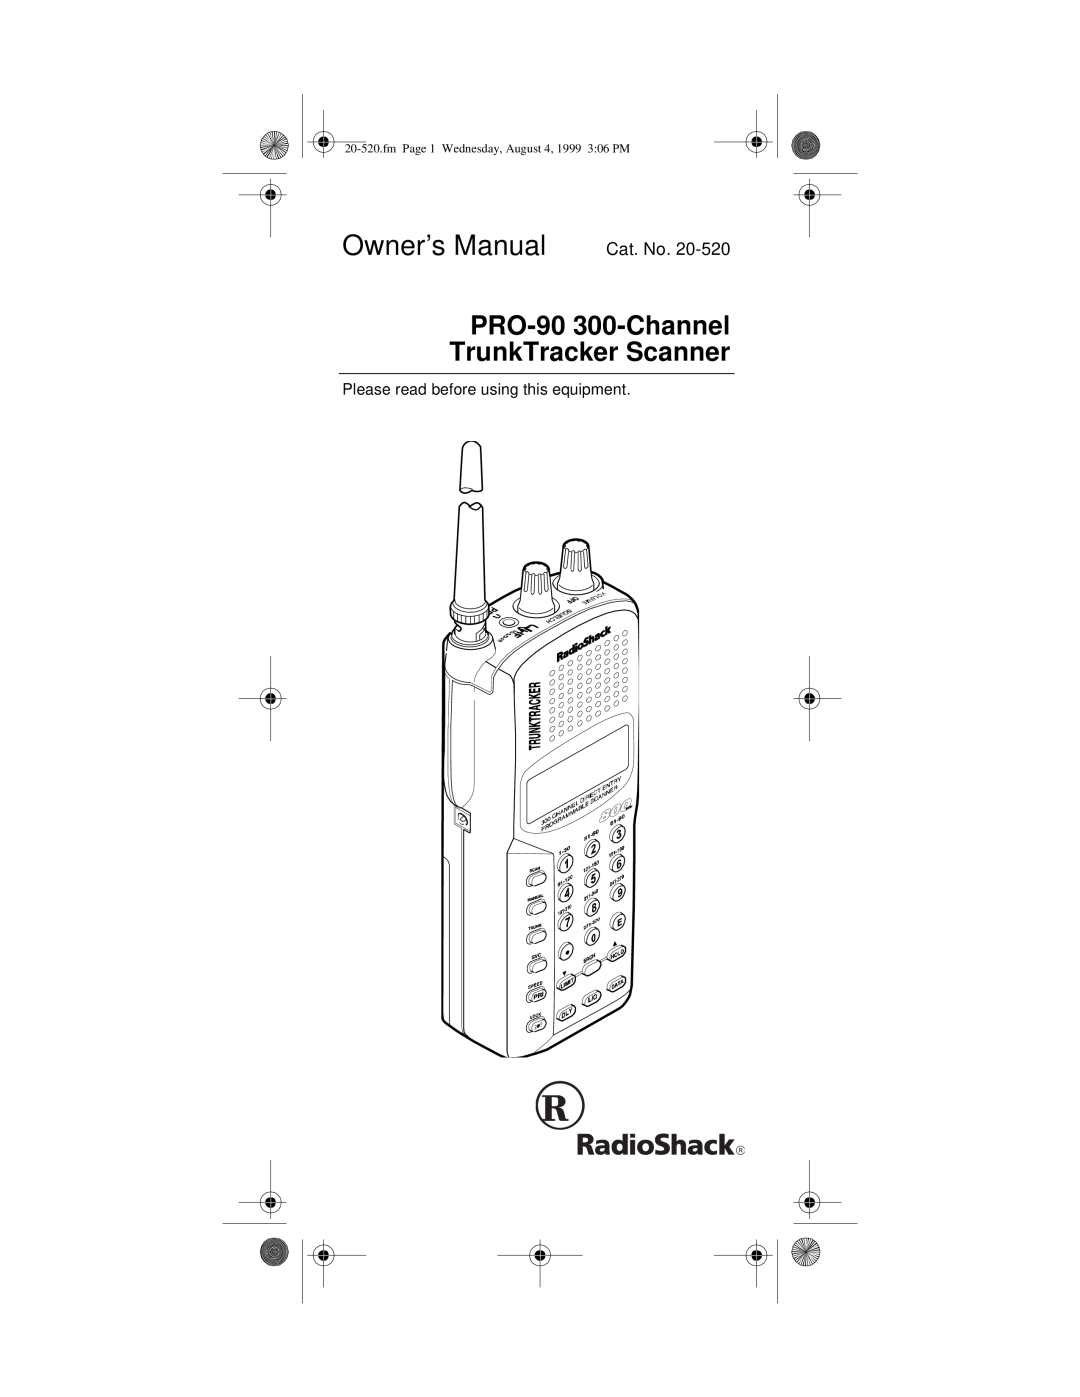 Radio Shack owner manual PRO-90 300-Channel TrunkTracker Scanner, Cat. No, Owner’s Manual 